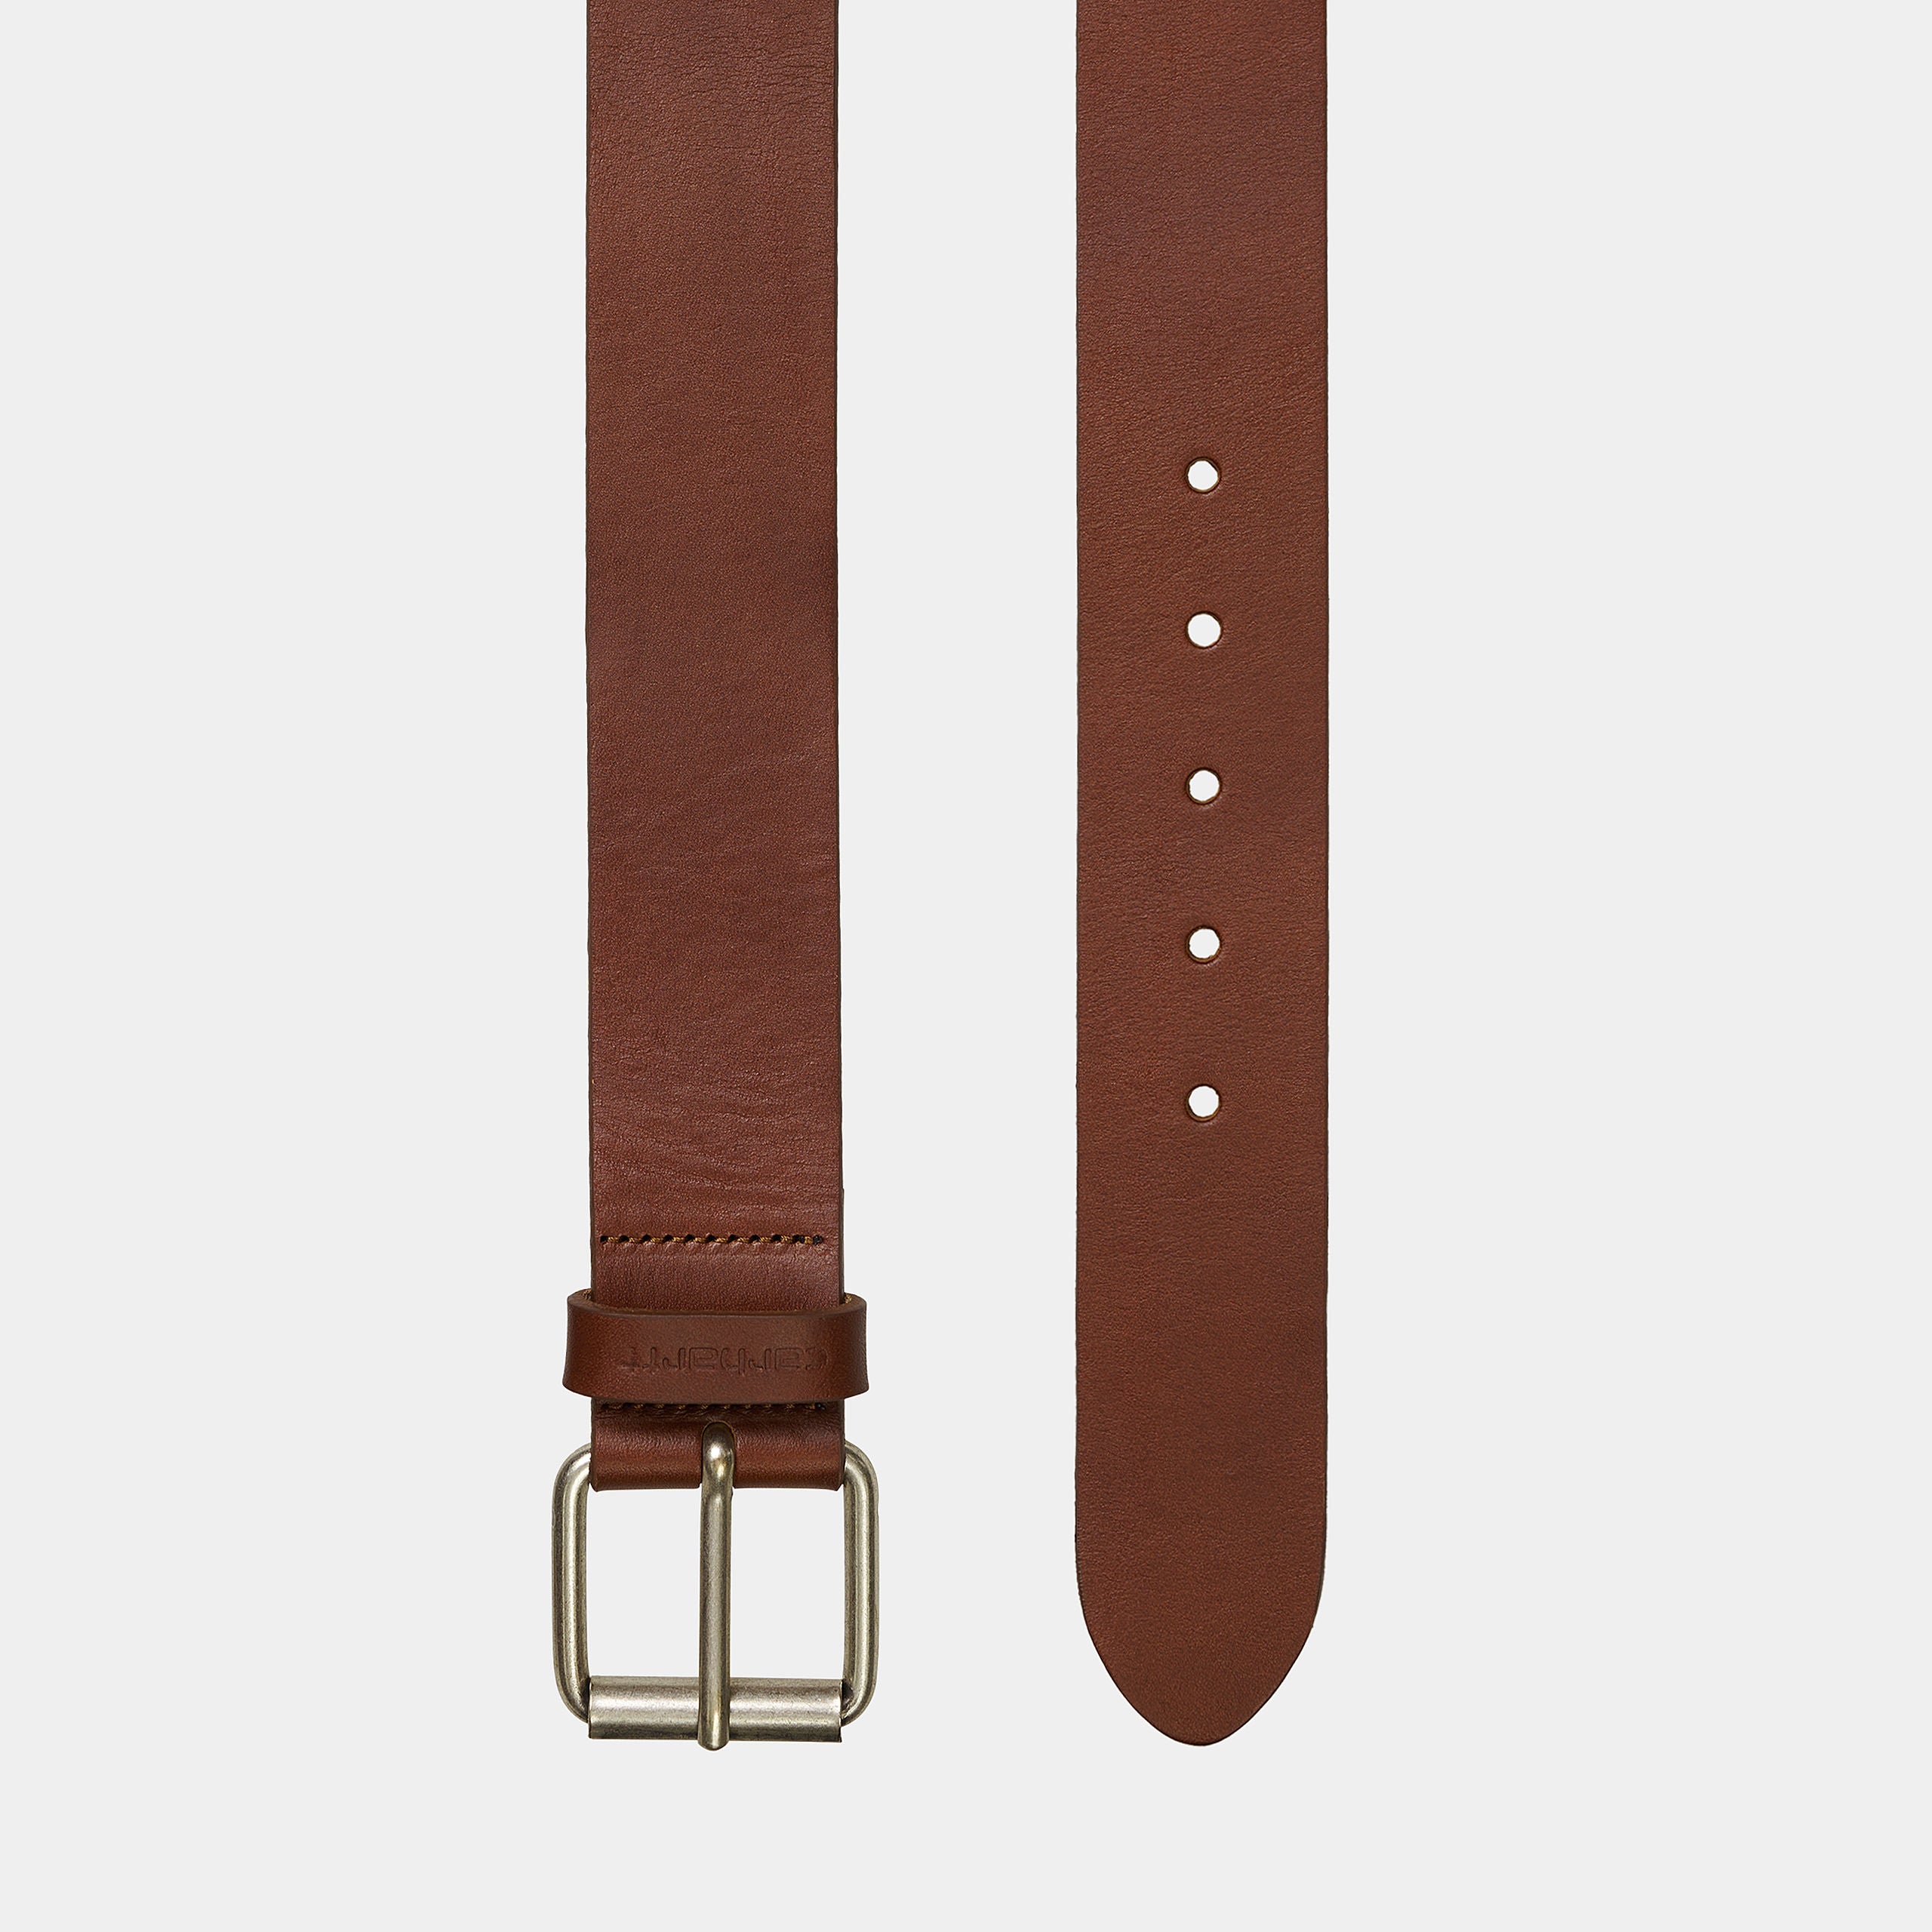 Carhartt WIP Script Belt aus 100% Leder in farbe Braun.